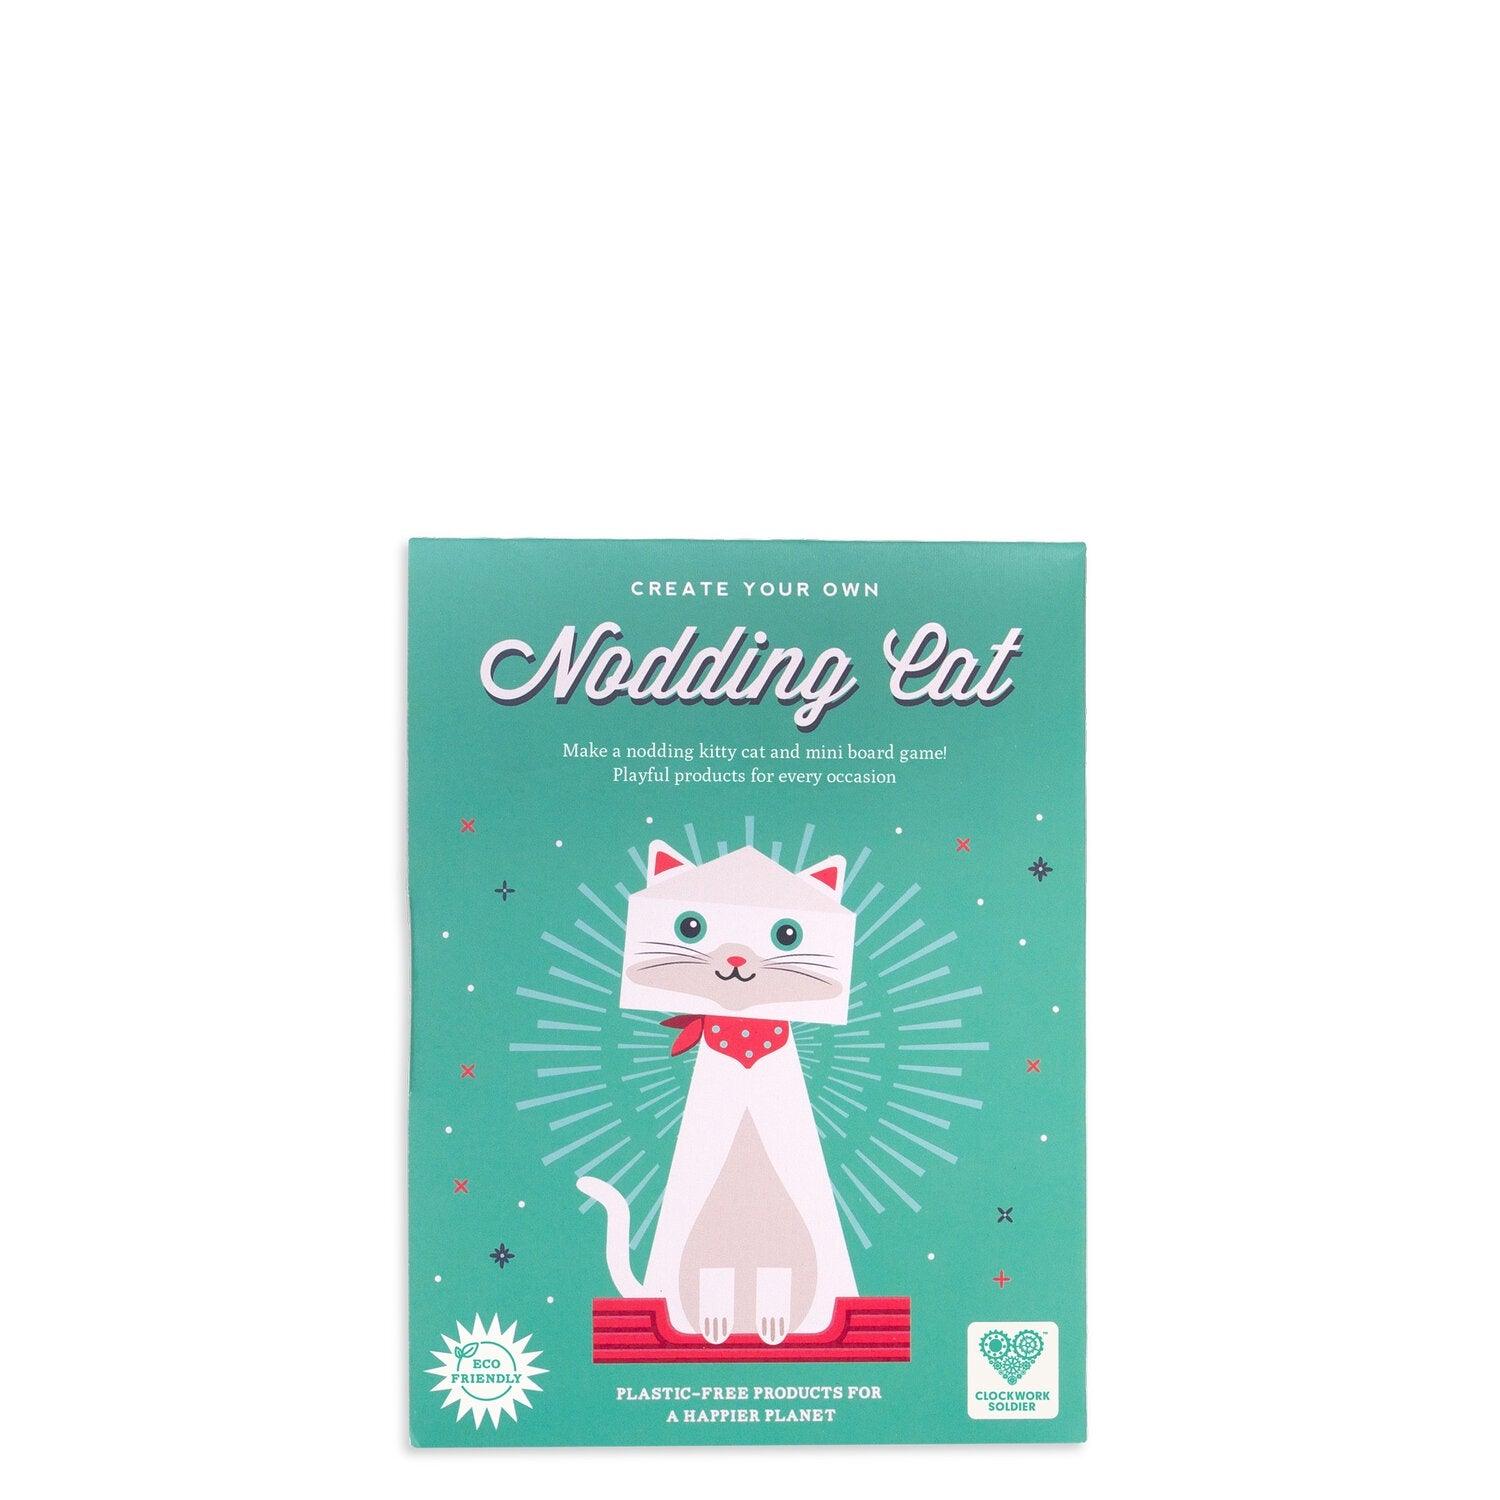 Create Your Own Nodding Cat - Pretty Shiny Shop